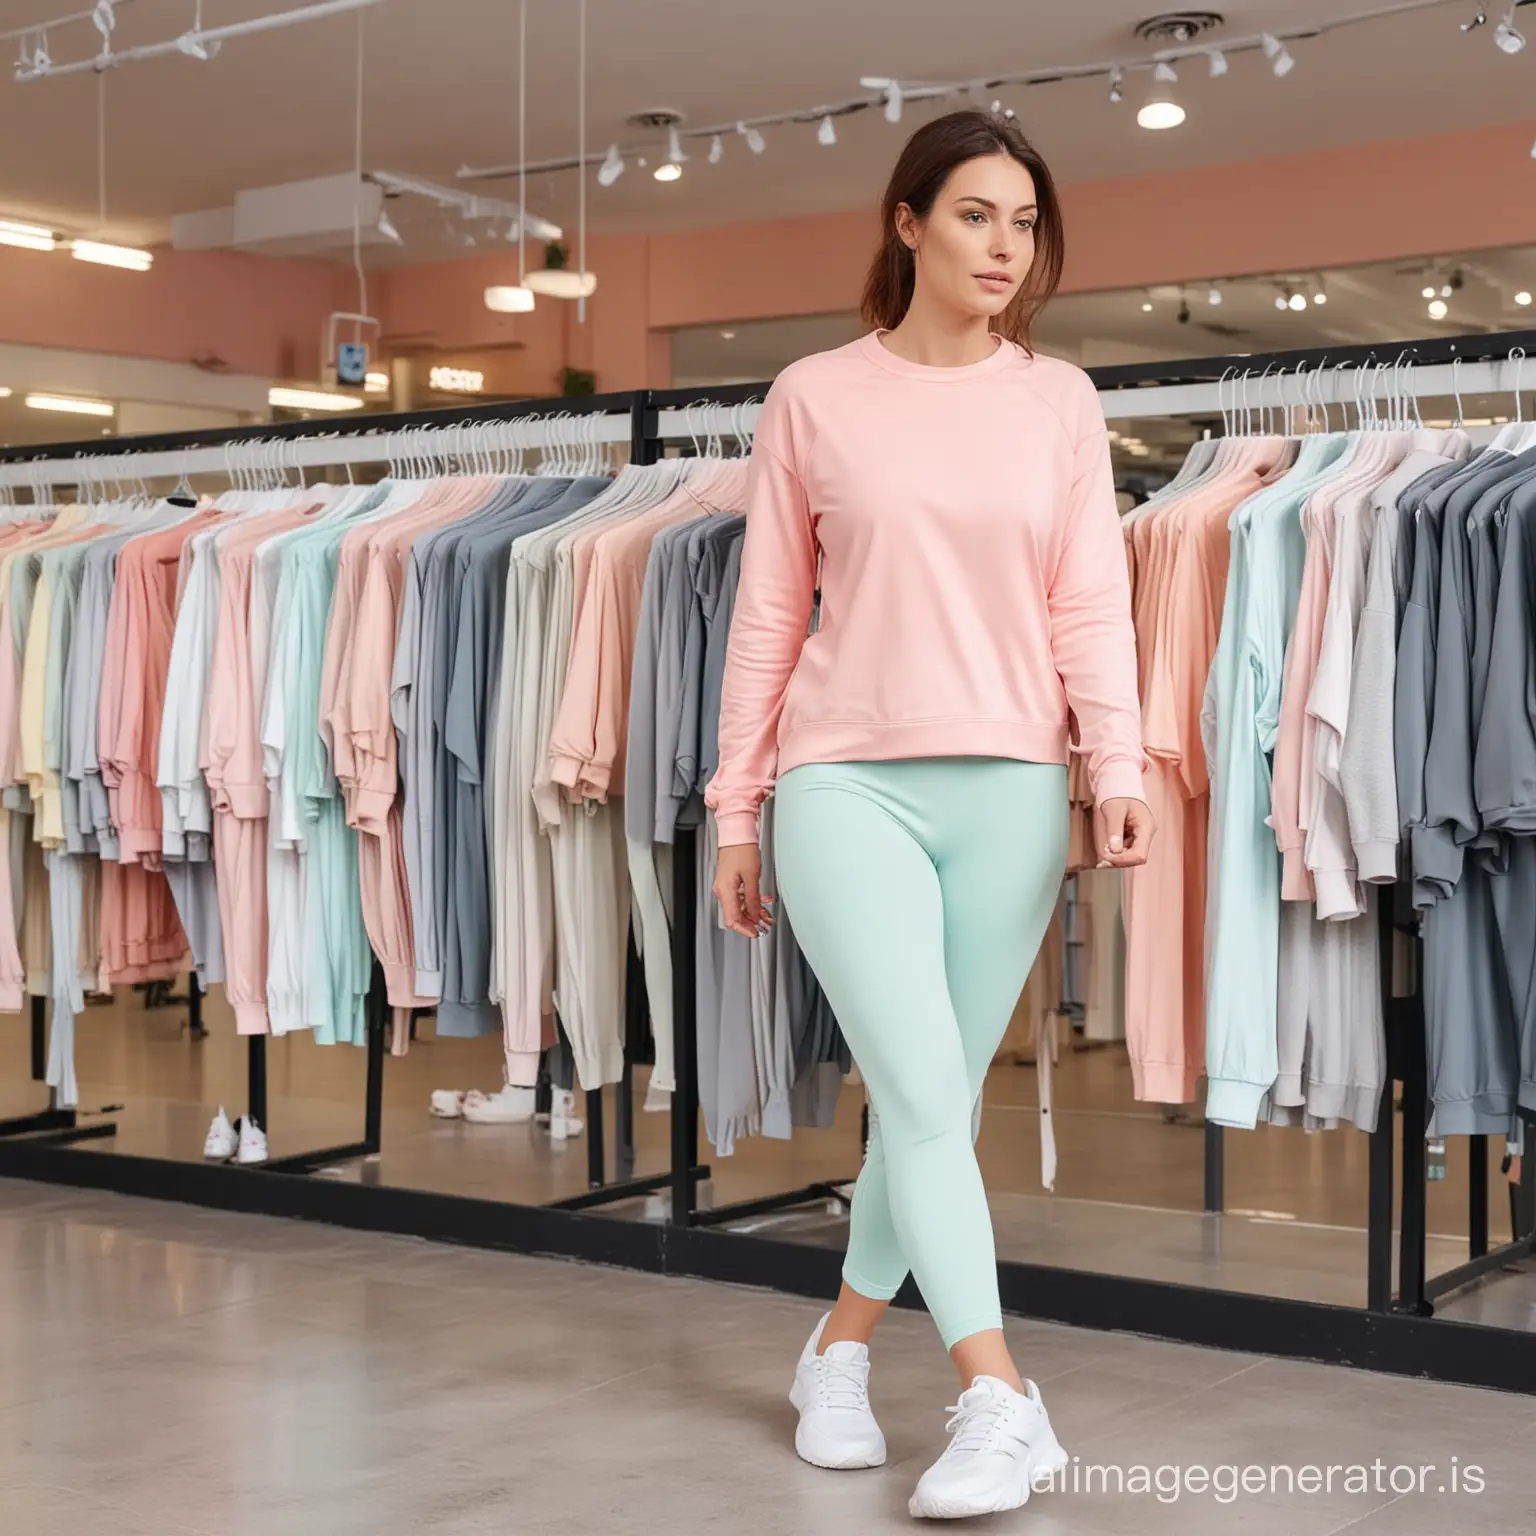 Auburn-Woman-Shopping-for-Leggings-in-Colorful-Sport-Store